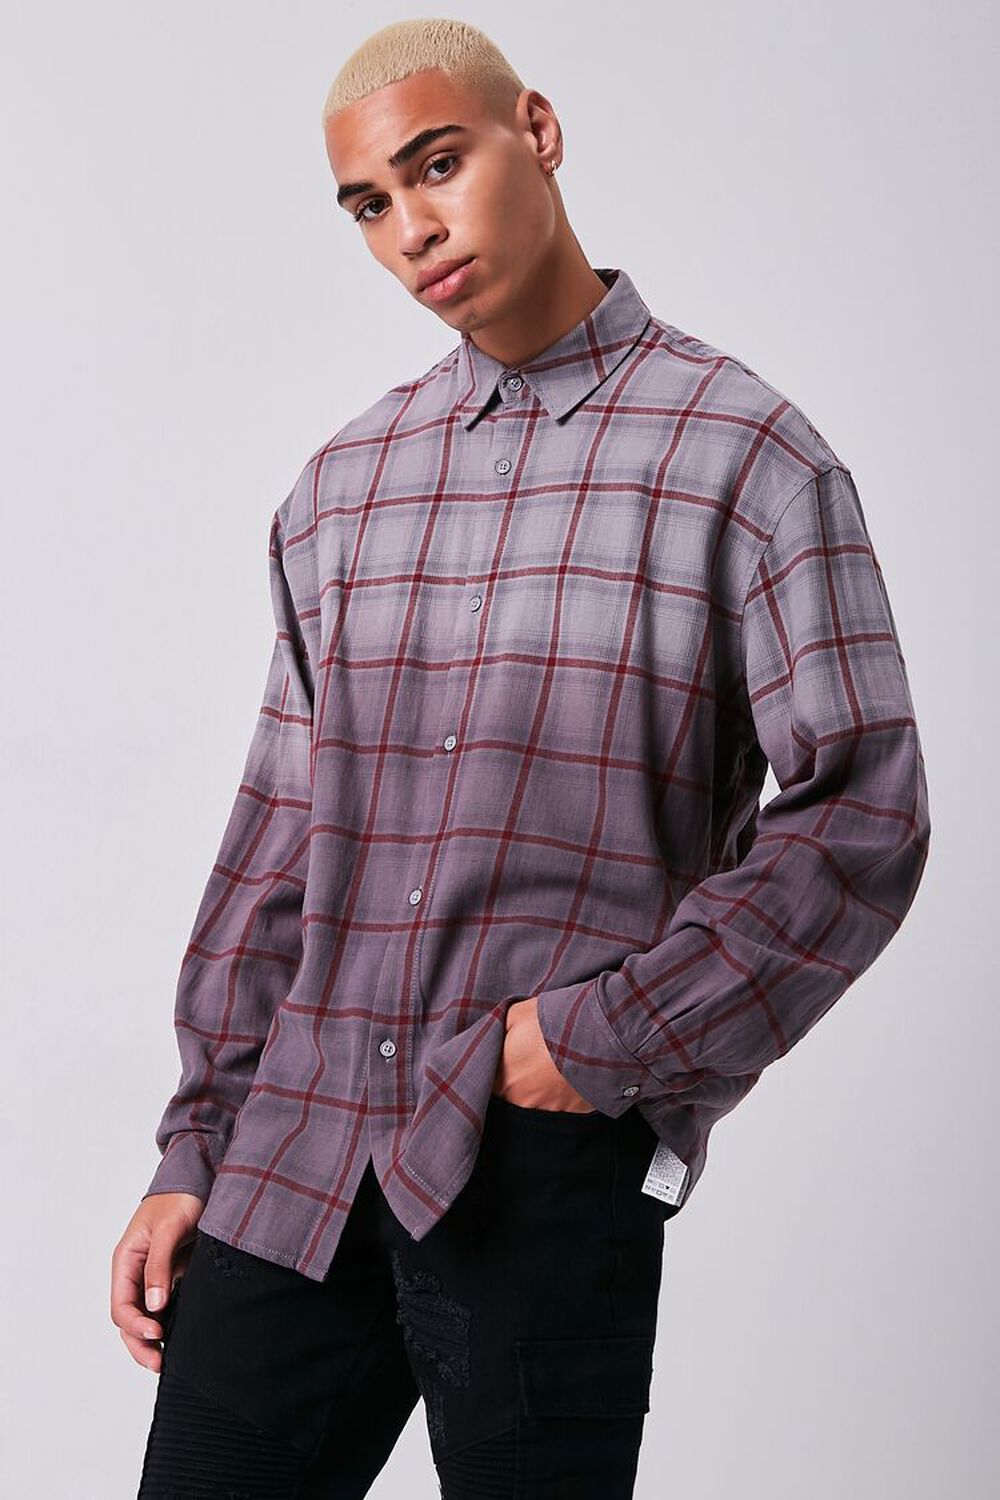 GREY/PLUM Grid Ombre Wash Flannel Shirt, image 1